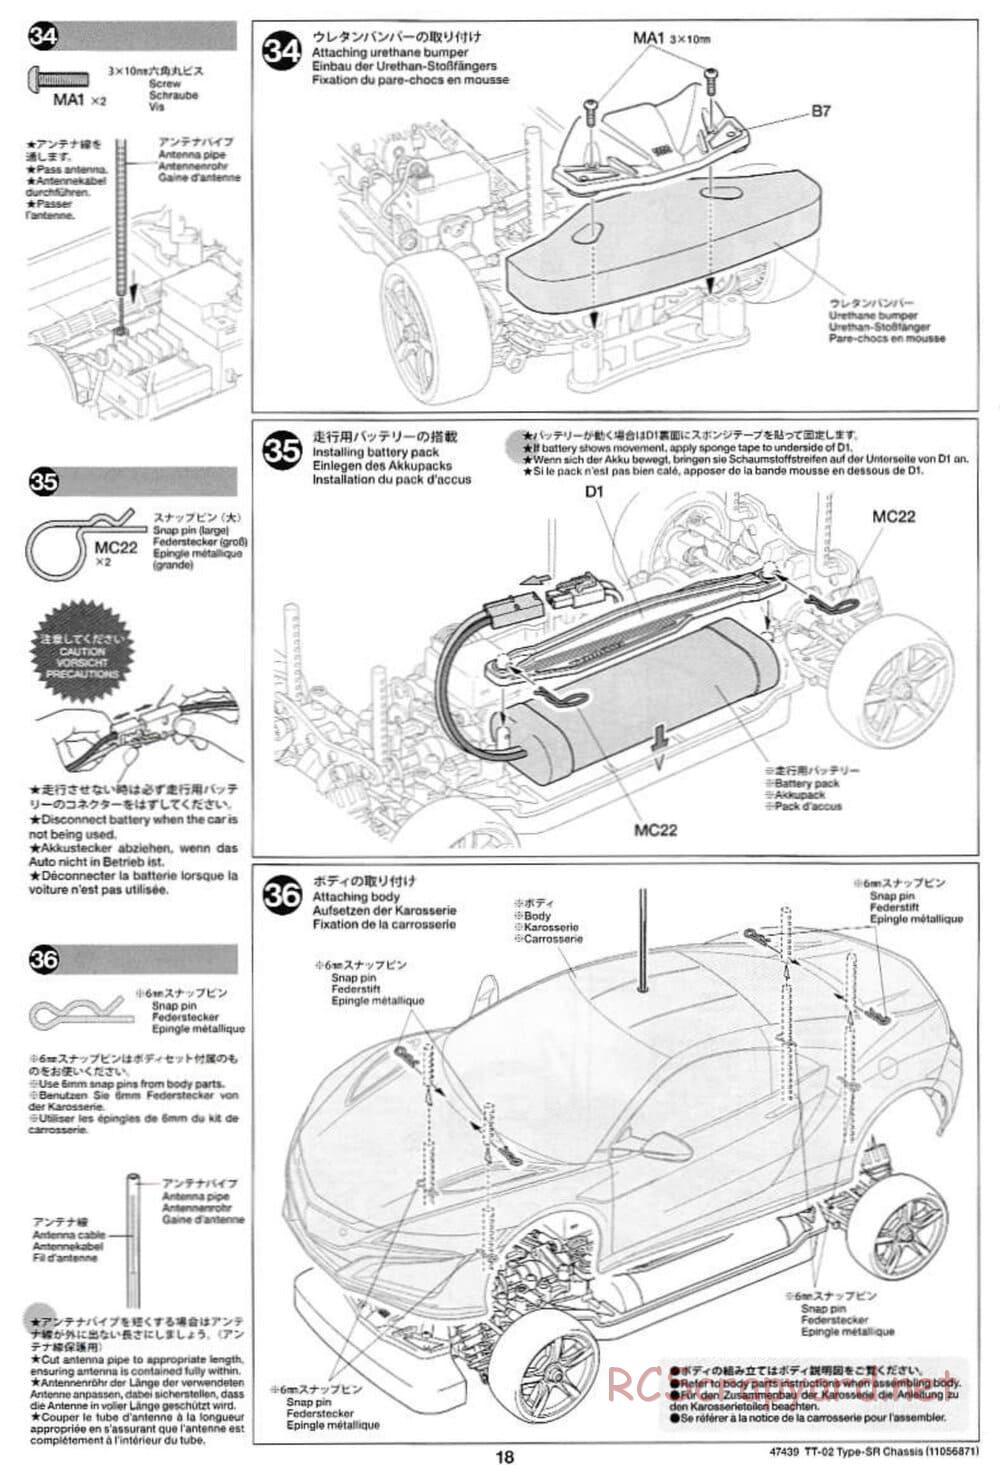 Tamiya - TT-02 Type-SR Chassis - Manual - Page 18